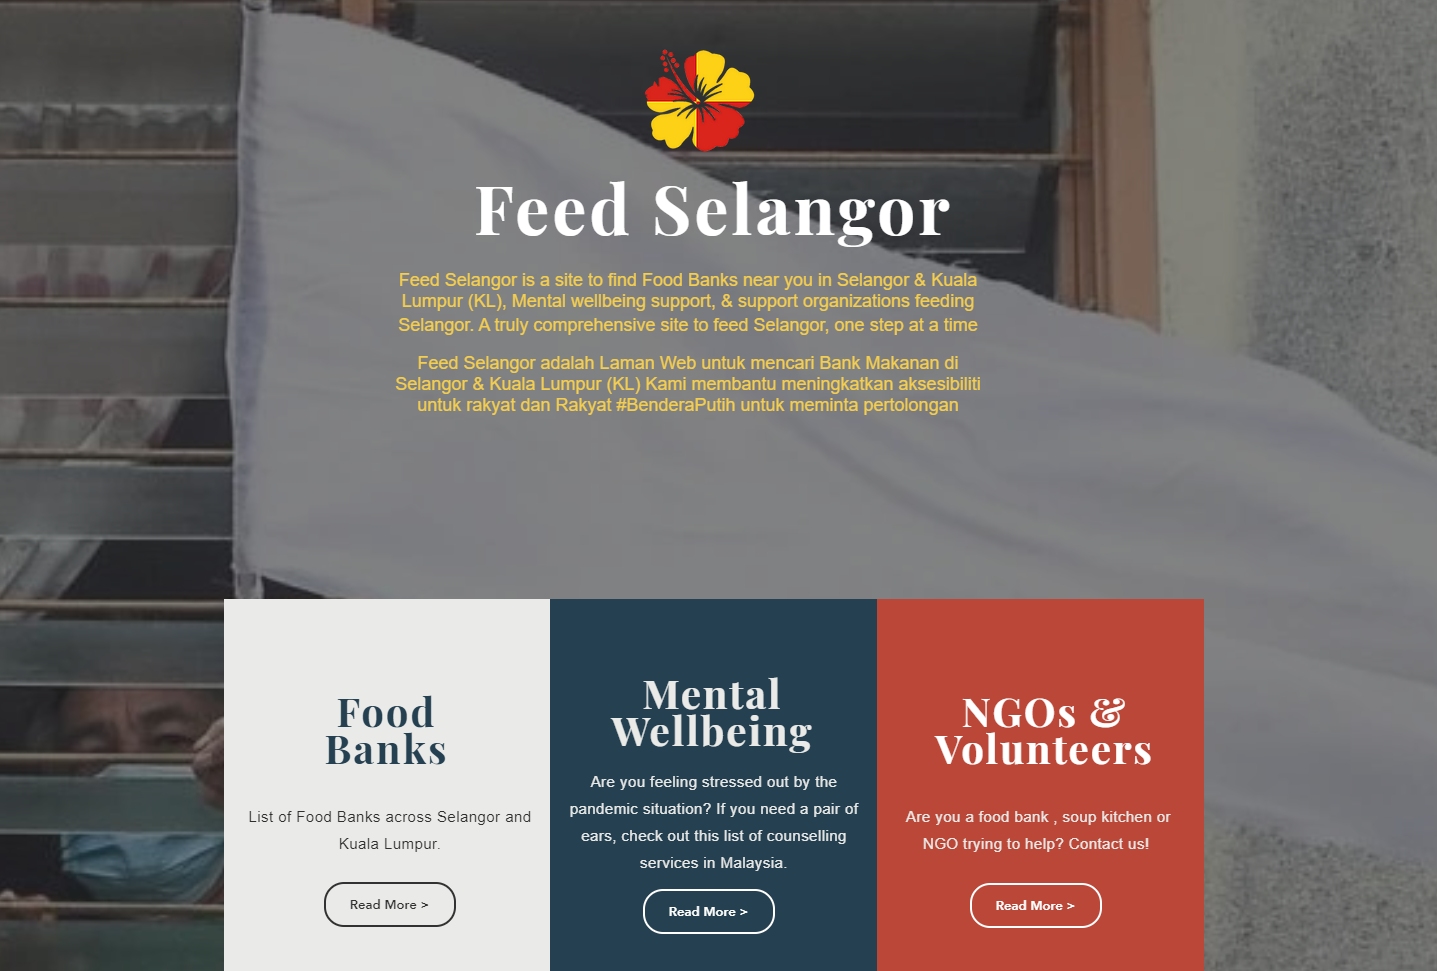 Feed Selangor旨在为巴生谷有需要的人提供食物、金钱和医疗援助，并且能够把慷慨解囊的善心人联系和凝聚在一起。